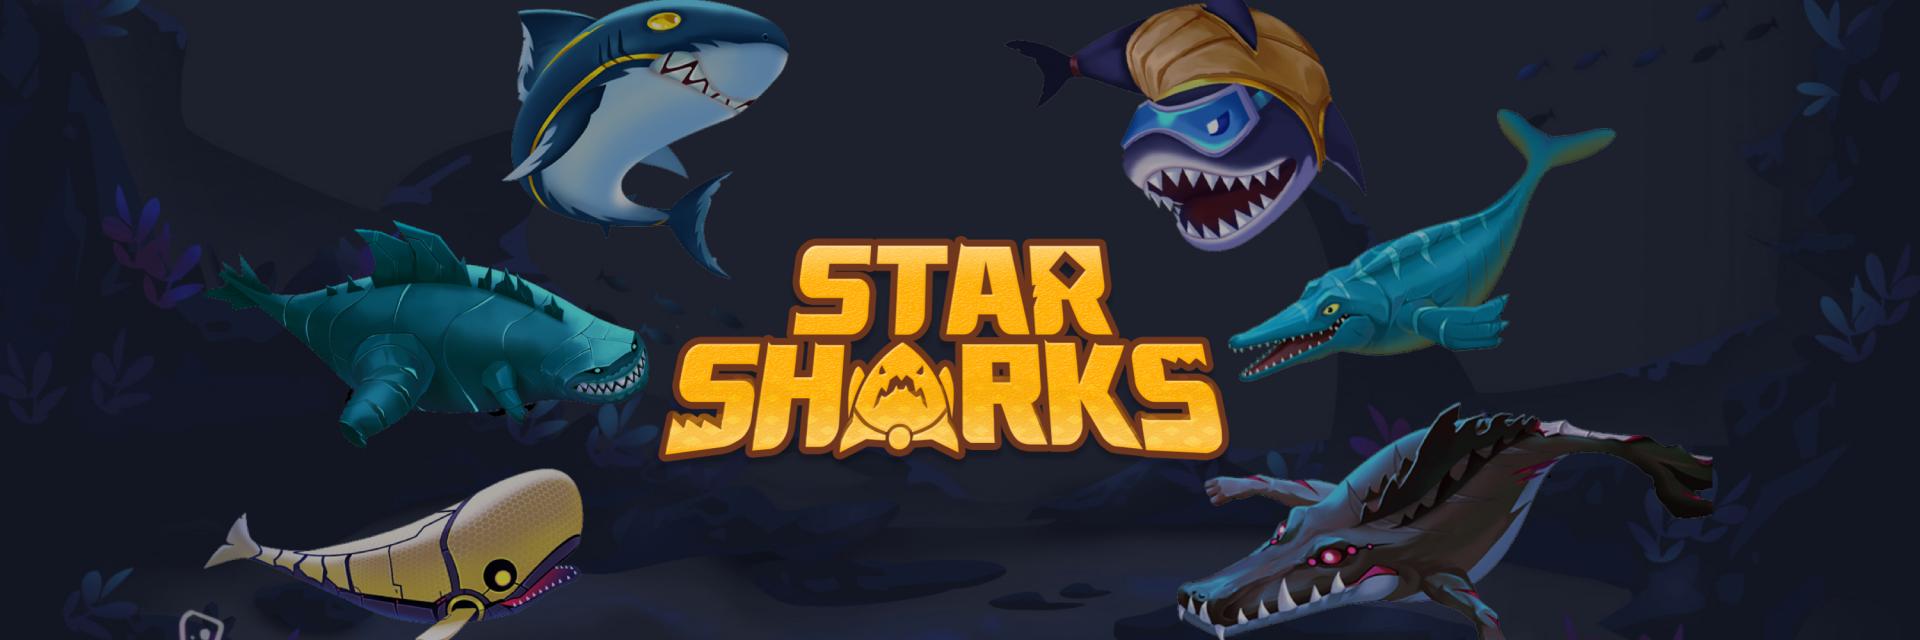 Shark Metaverse Backed By Binance StarSharks Raises 46 Million Shark Metaverse Backed By Binance StarSharks Raises $ 4.6 Million In Private Round - CoinCheckup Blog